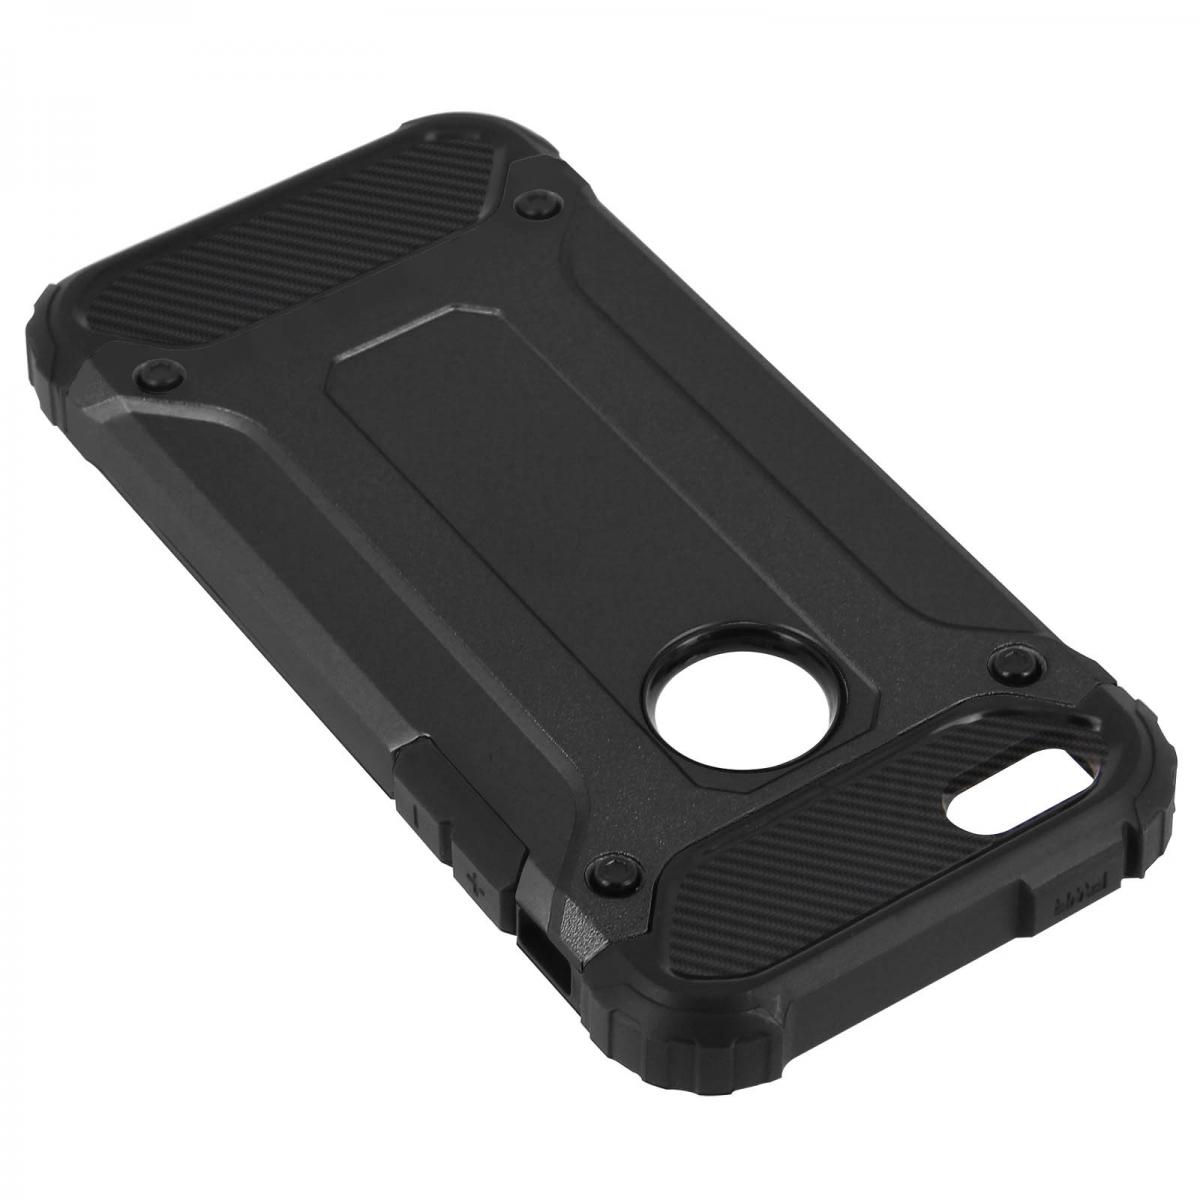 Avizar - Coque Protection Antichoc Noir Apple iPhone 6 et 6s - Antichutes (1,80m) - Coque, étui smartphone